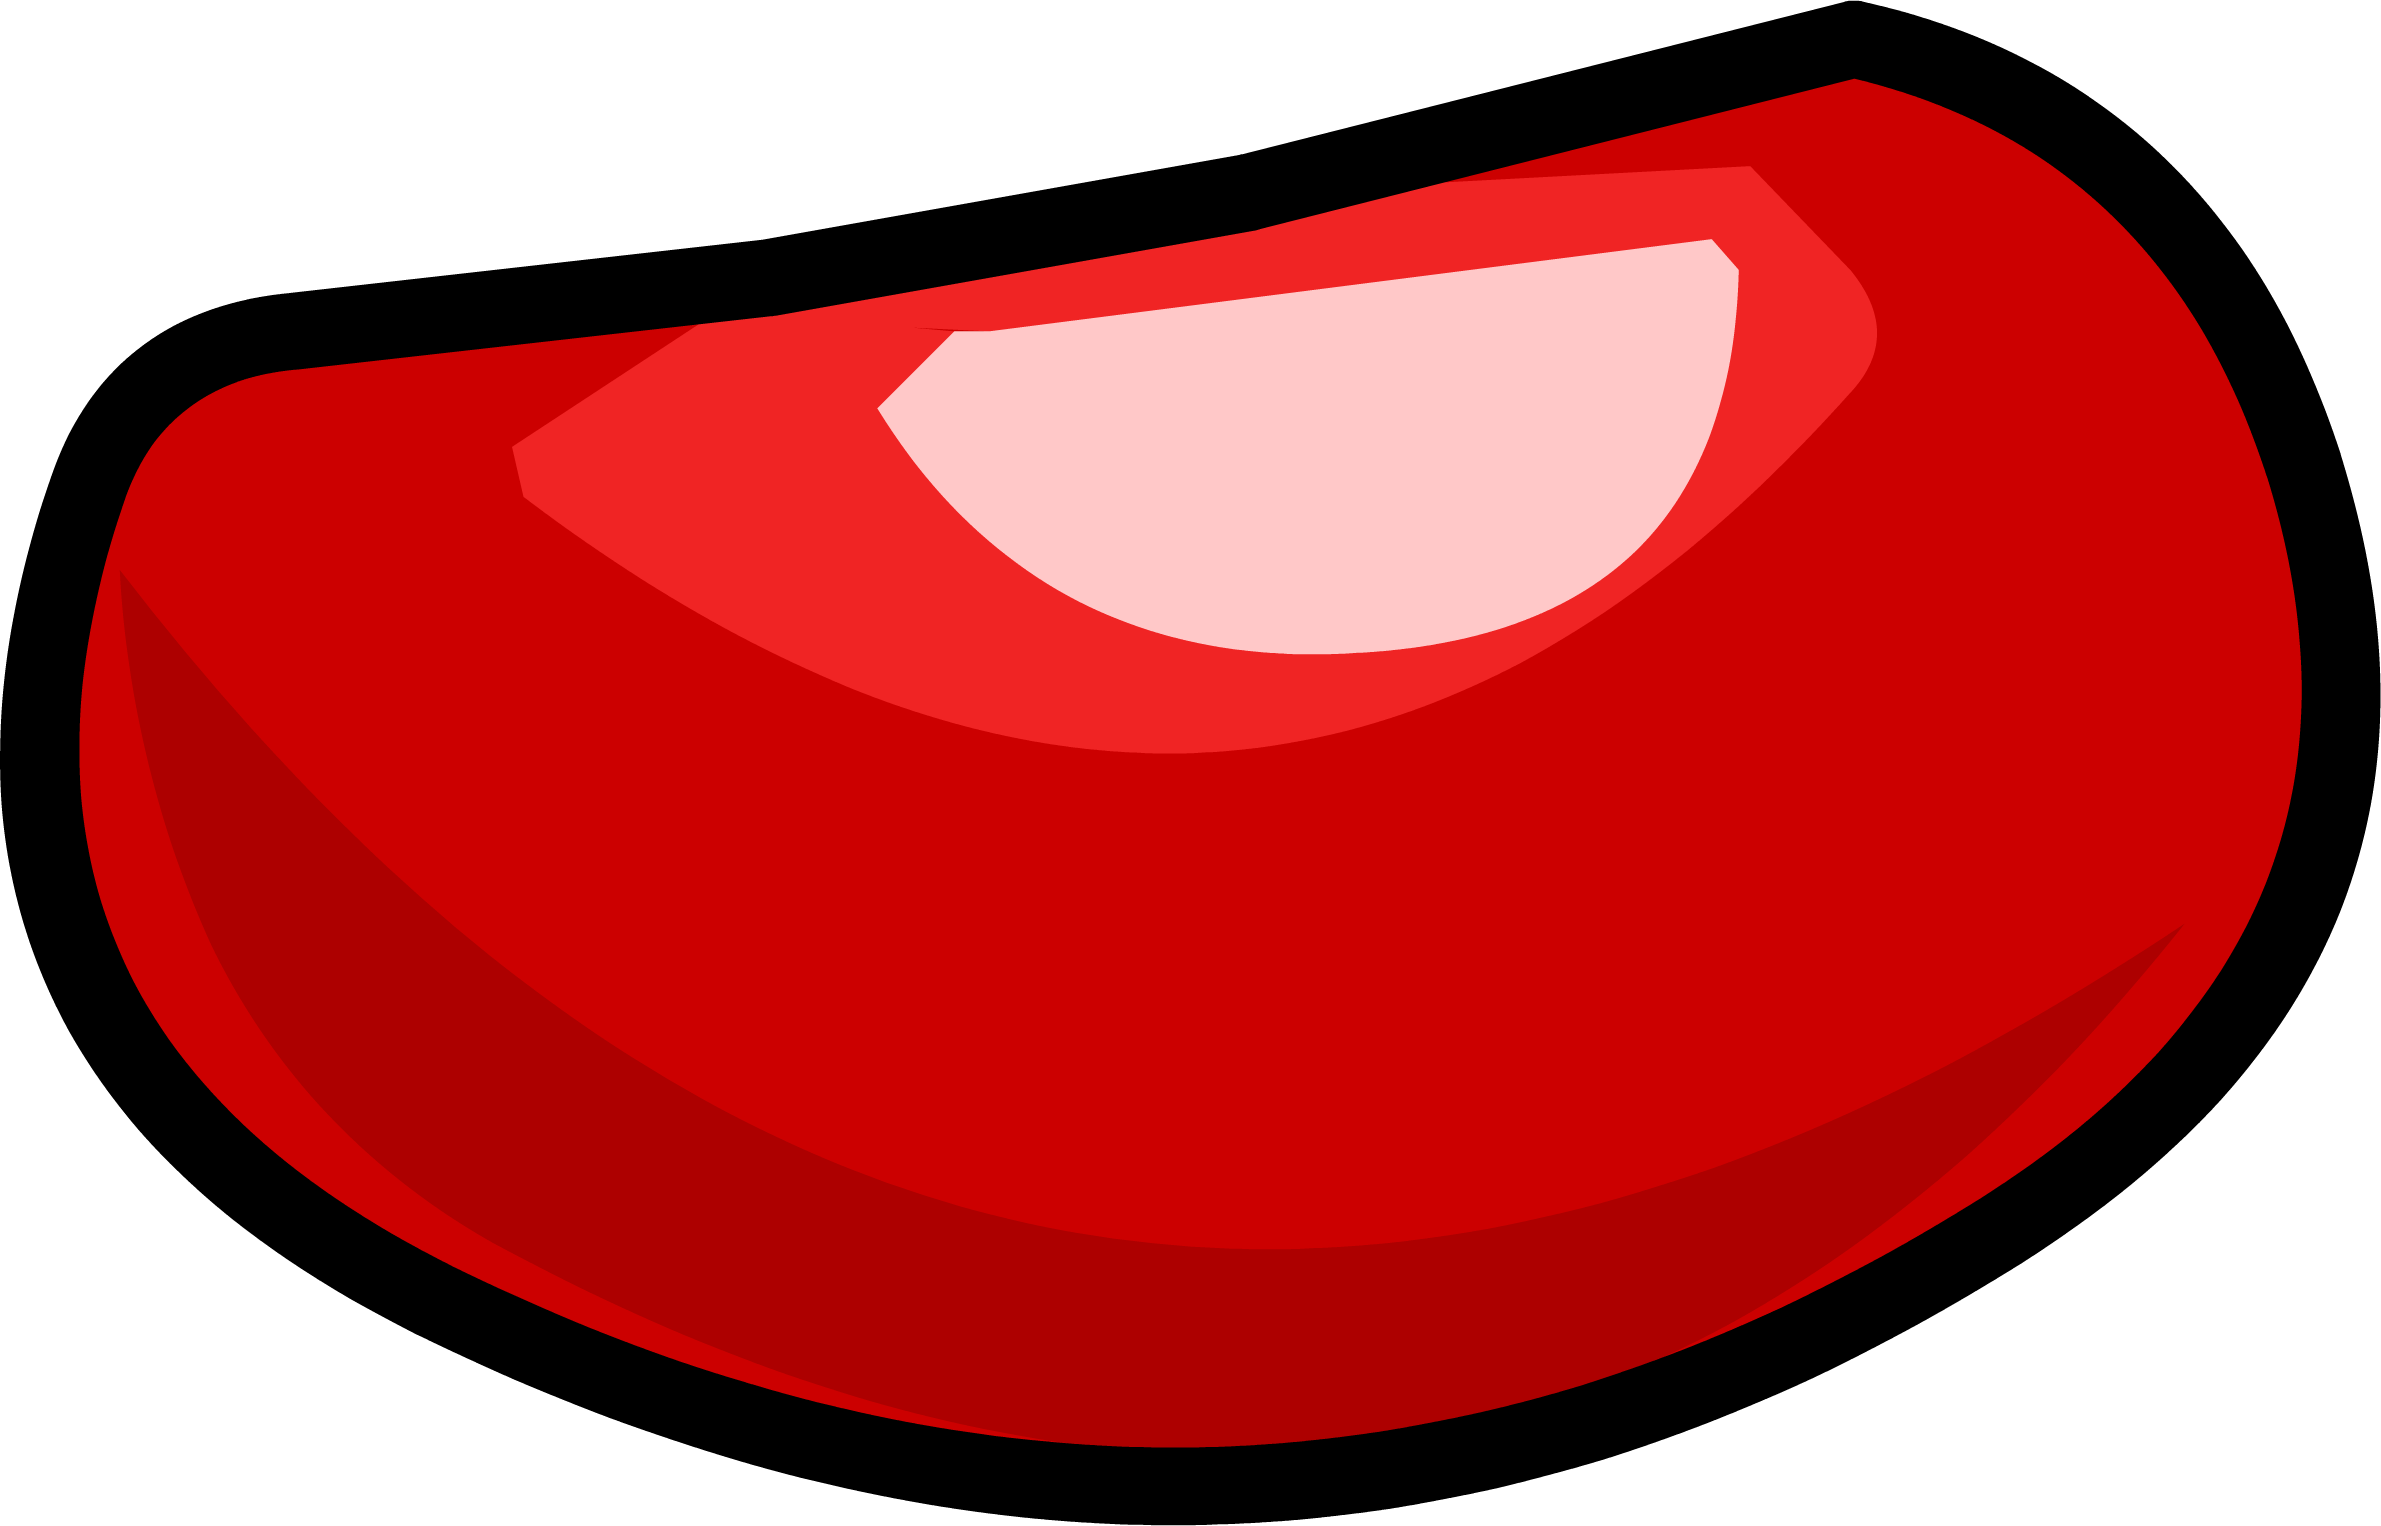 Jelly Beans | Club Penguin Wiki | Fandom powered by Wikia